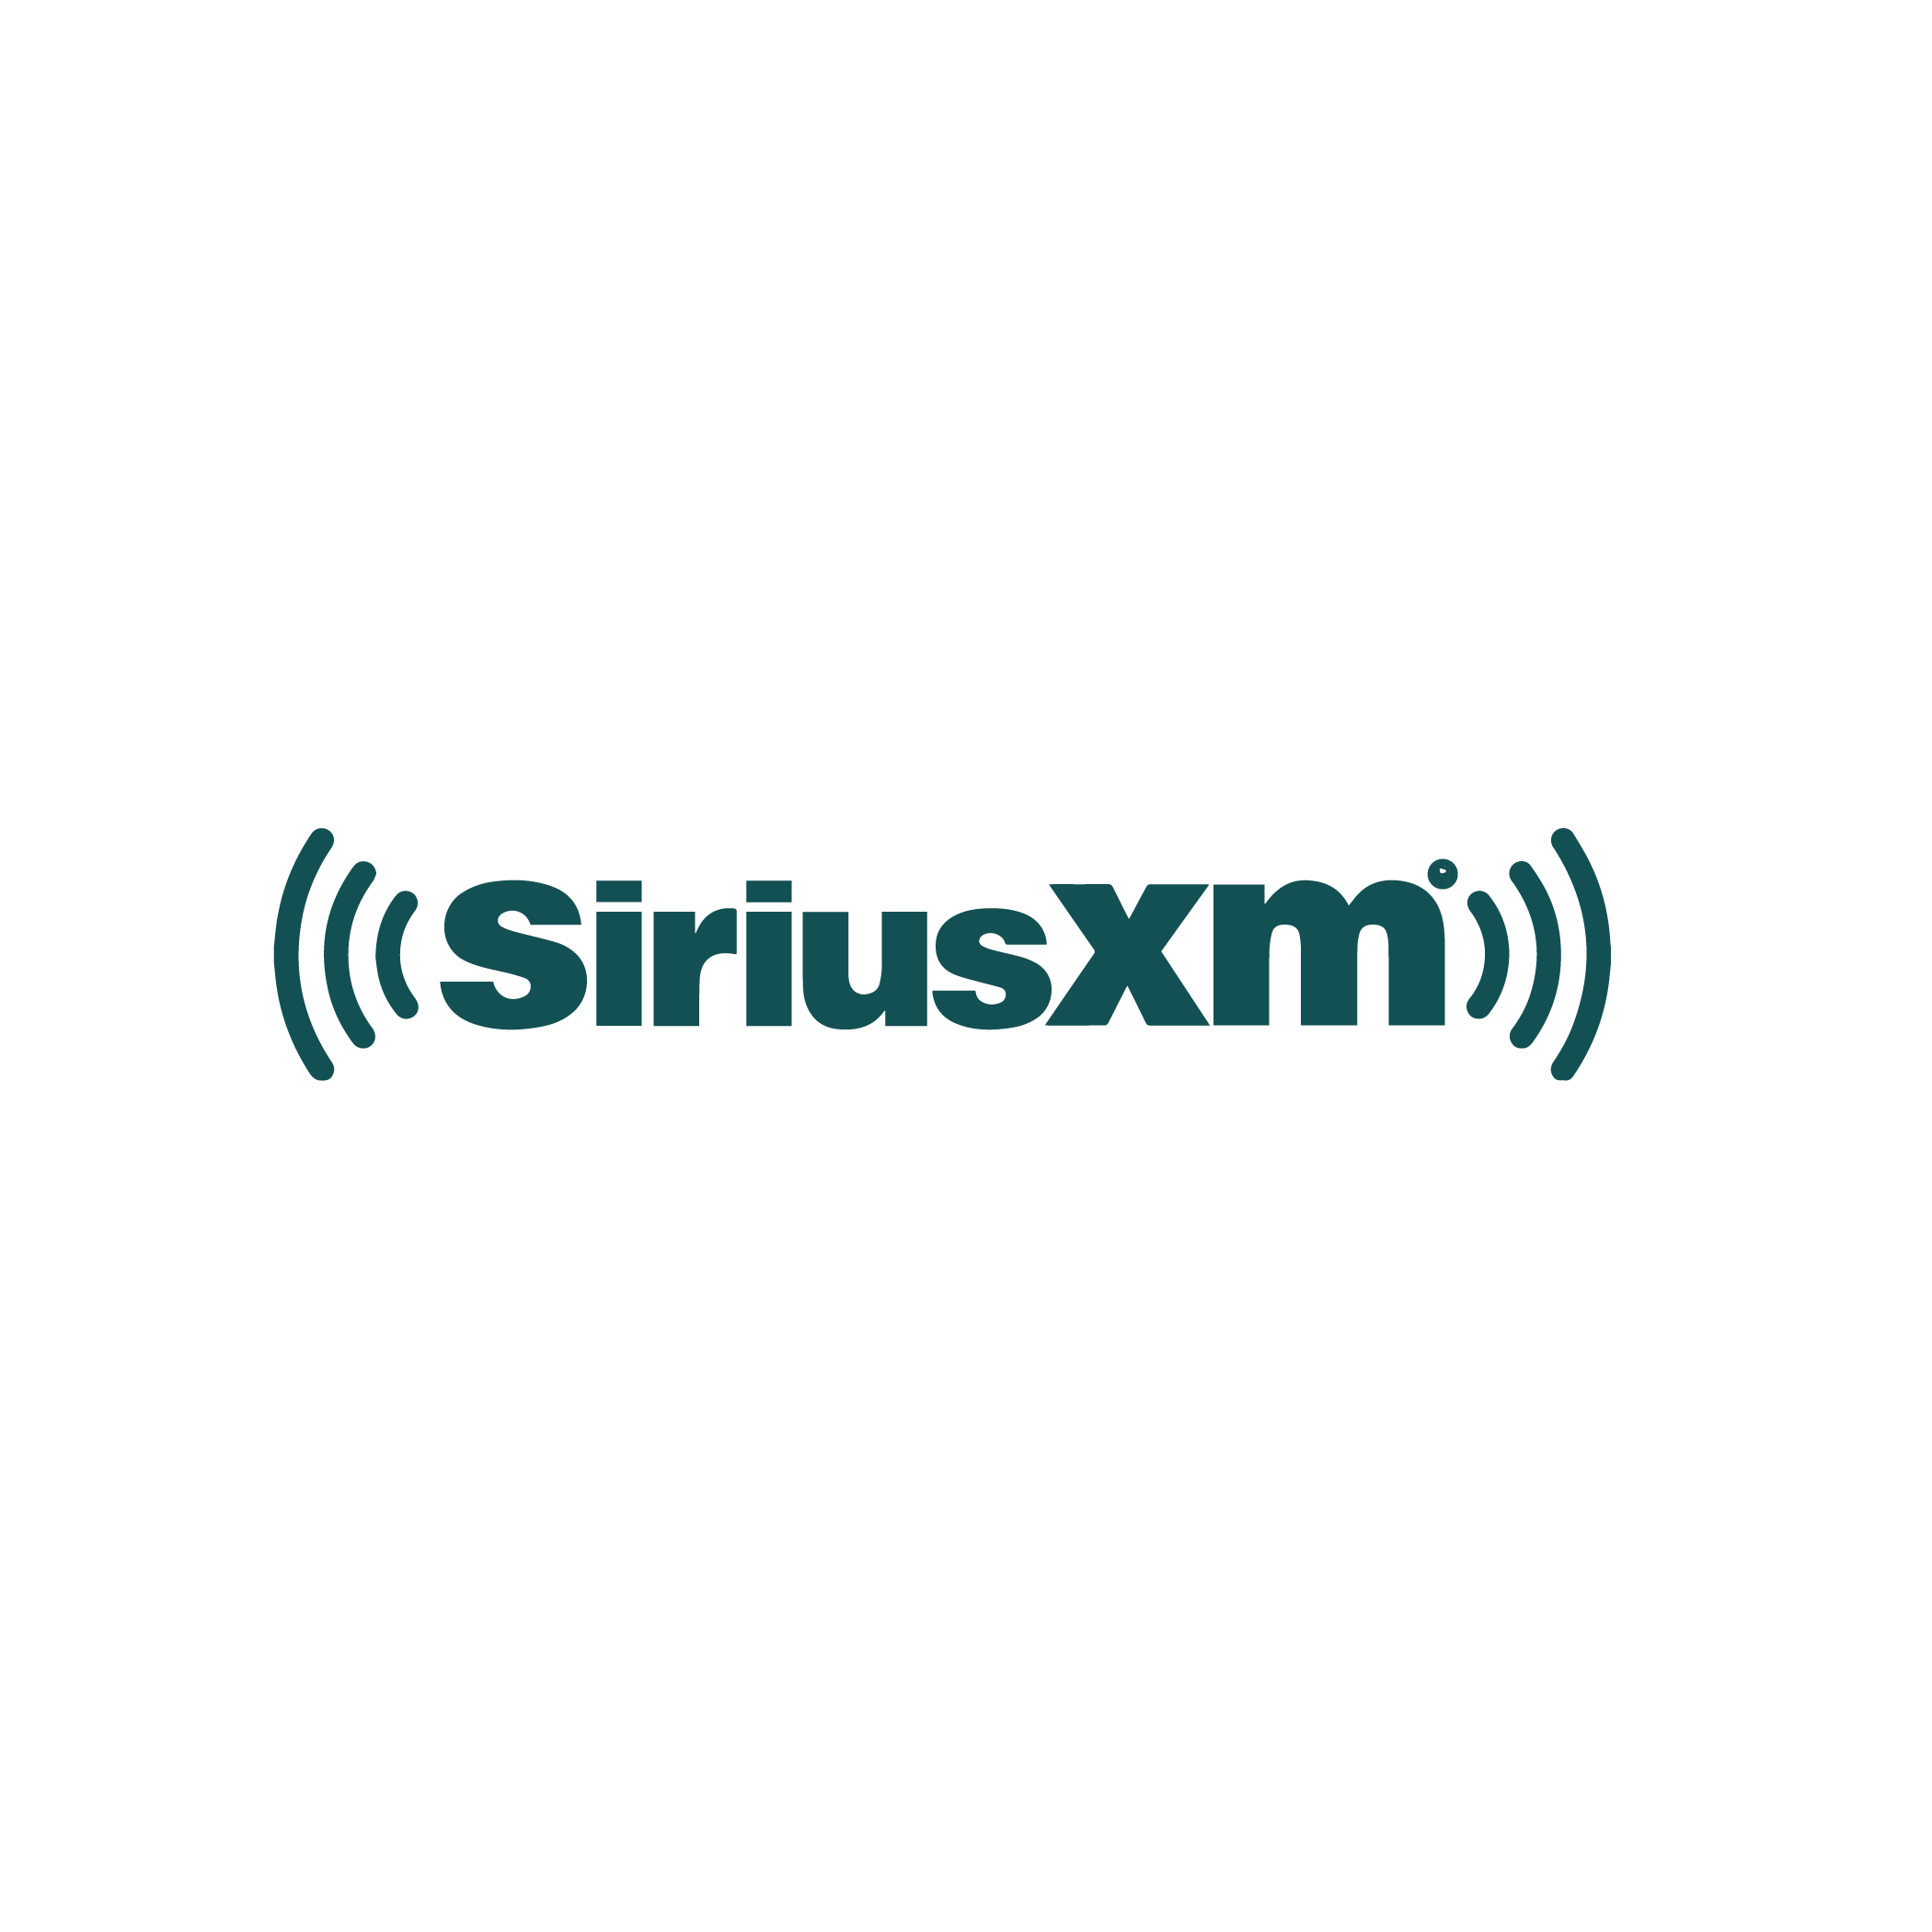 Sirius XM Logo